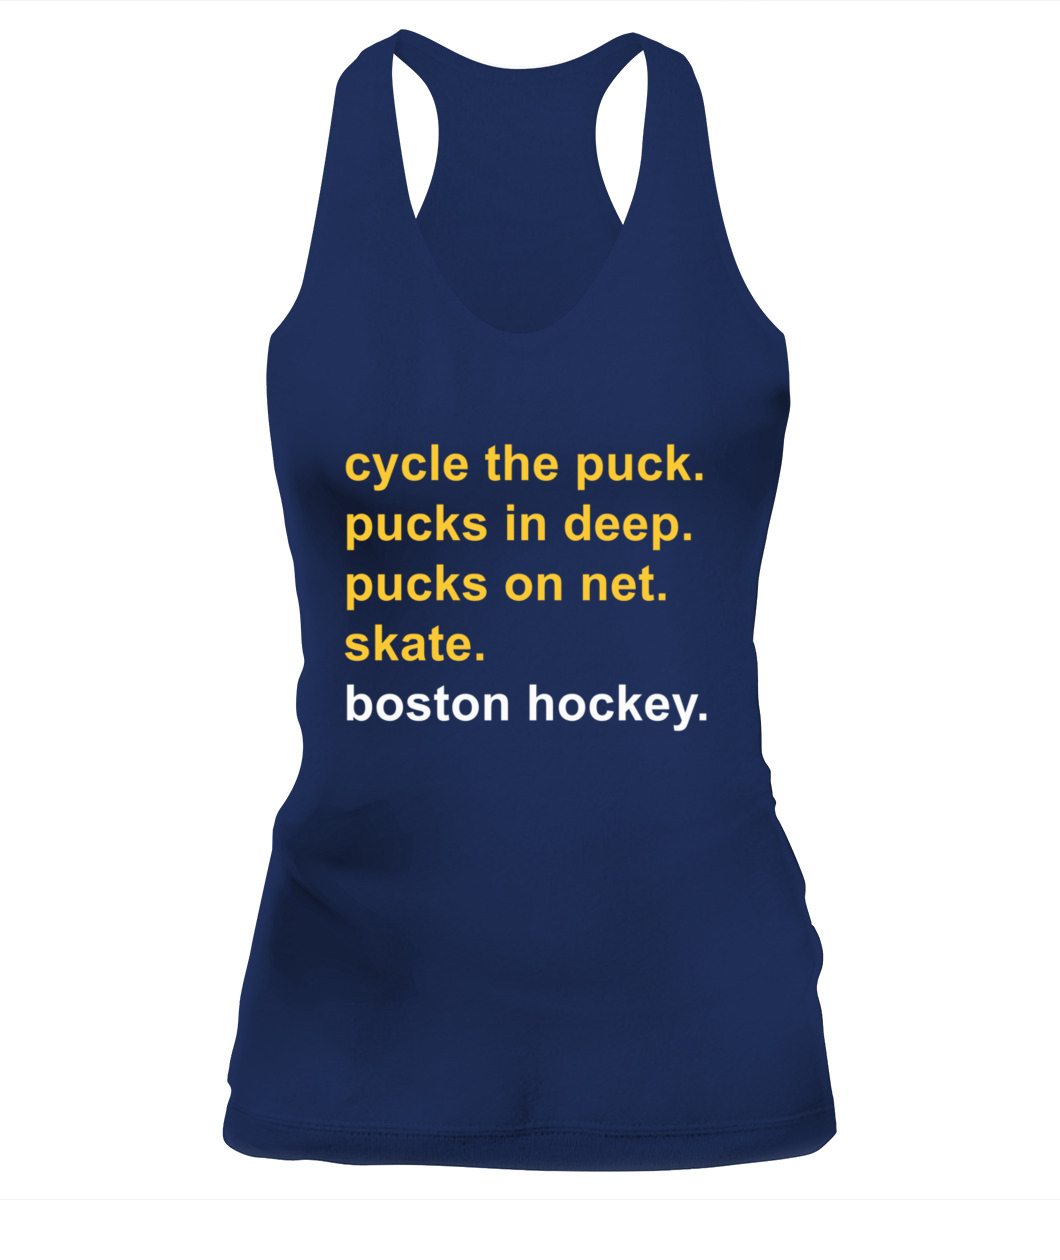 Cycle the puck pucks in deep pucks on net skate Boston hockey